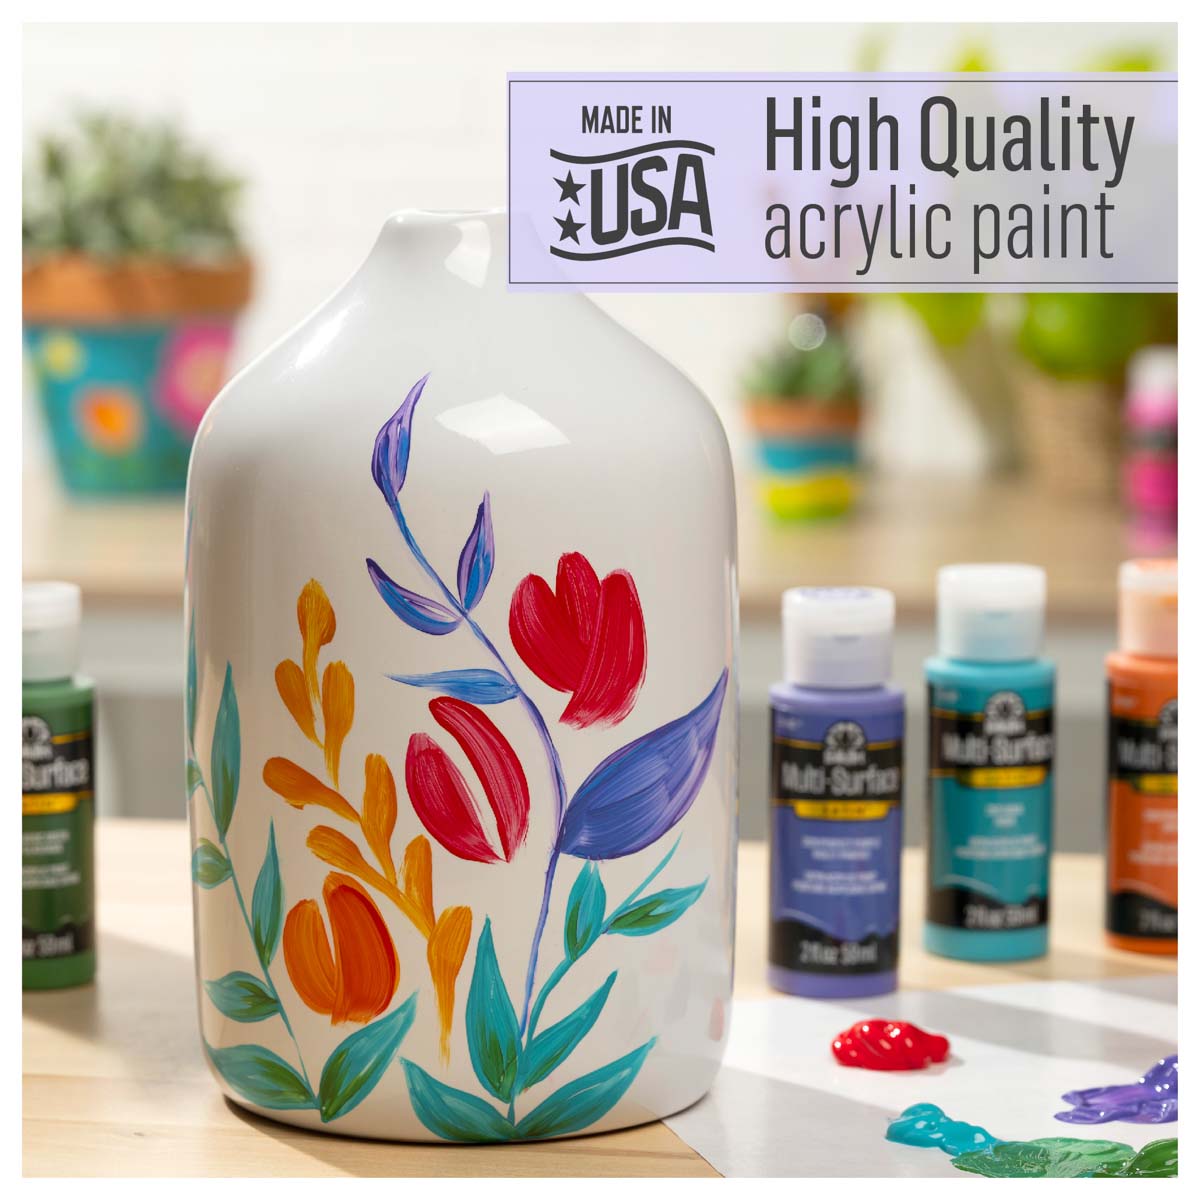 FolkArt ® Multi-Surface Satin Acrylic Paints - Linen, 2 oz. - 2982